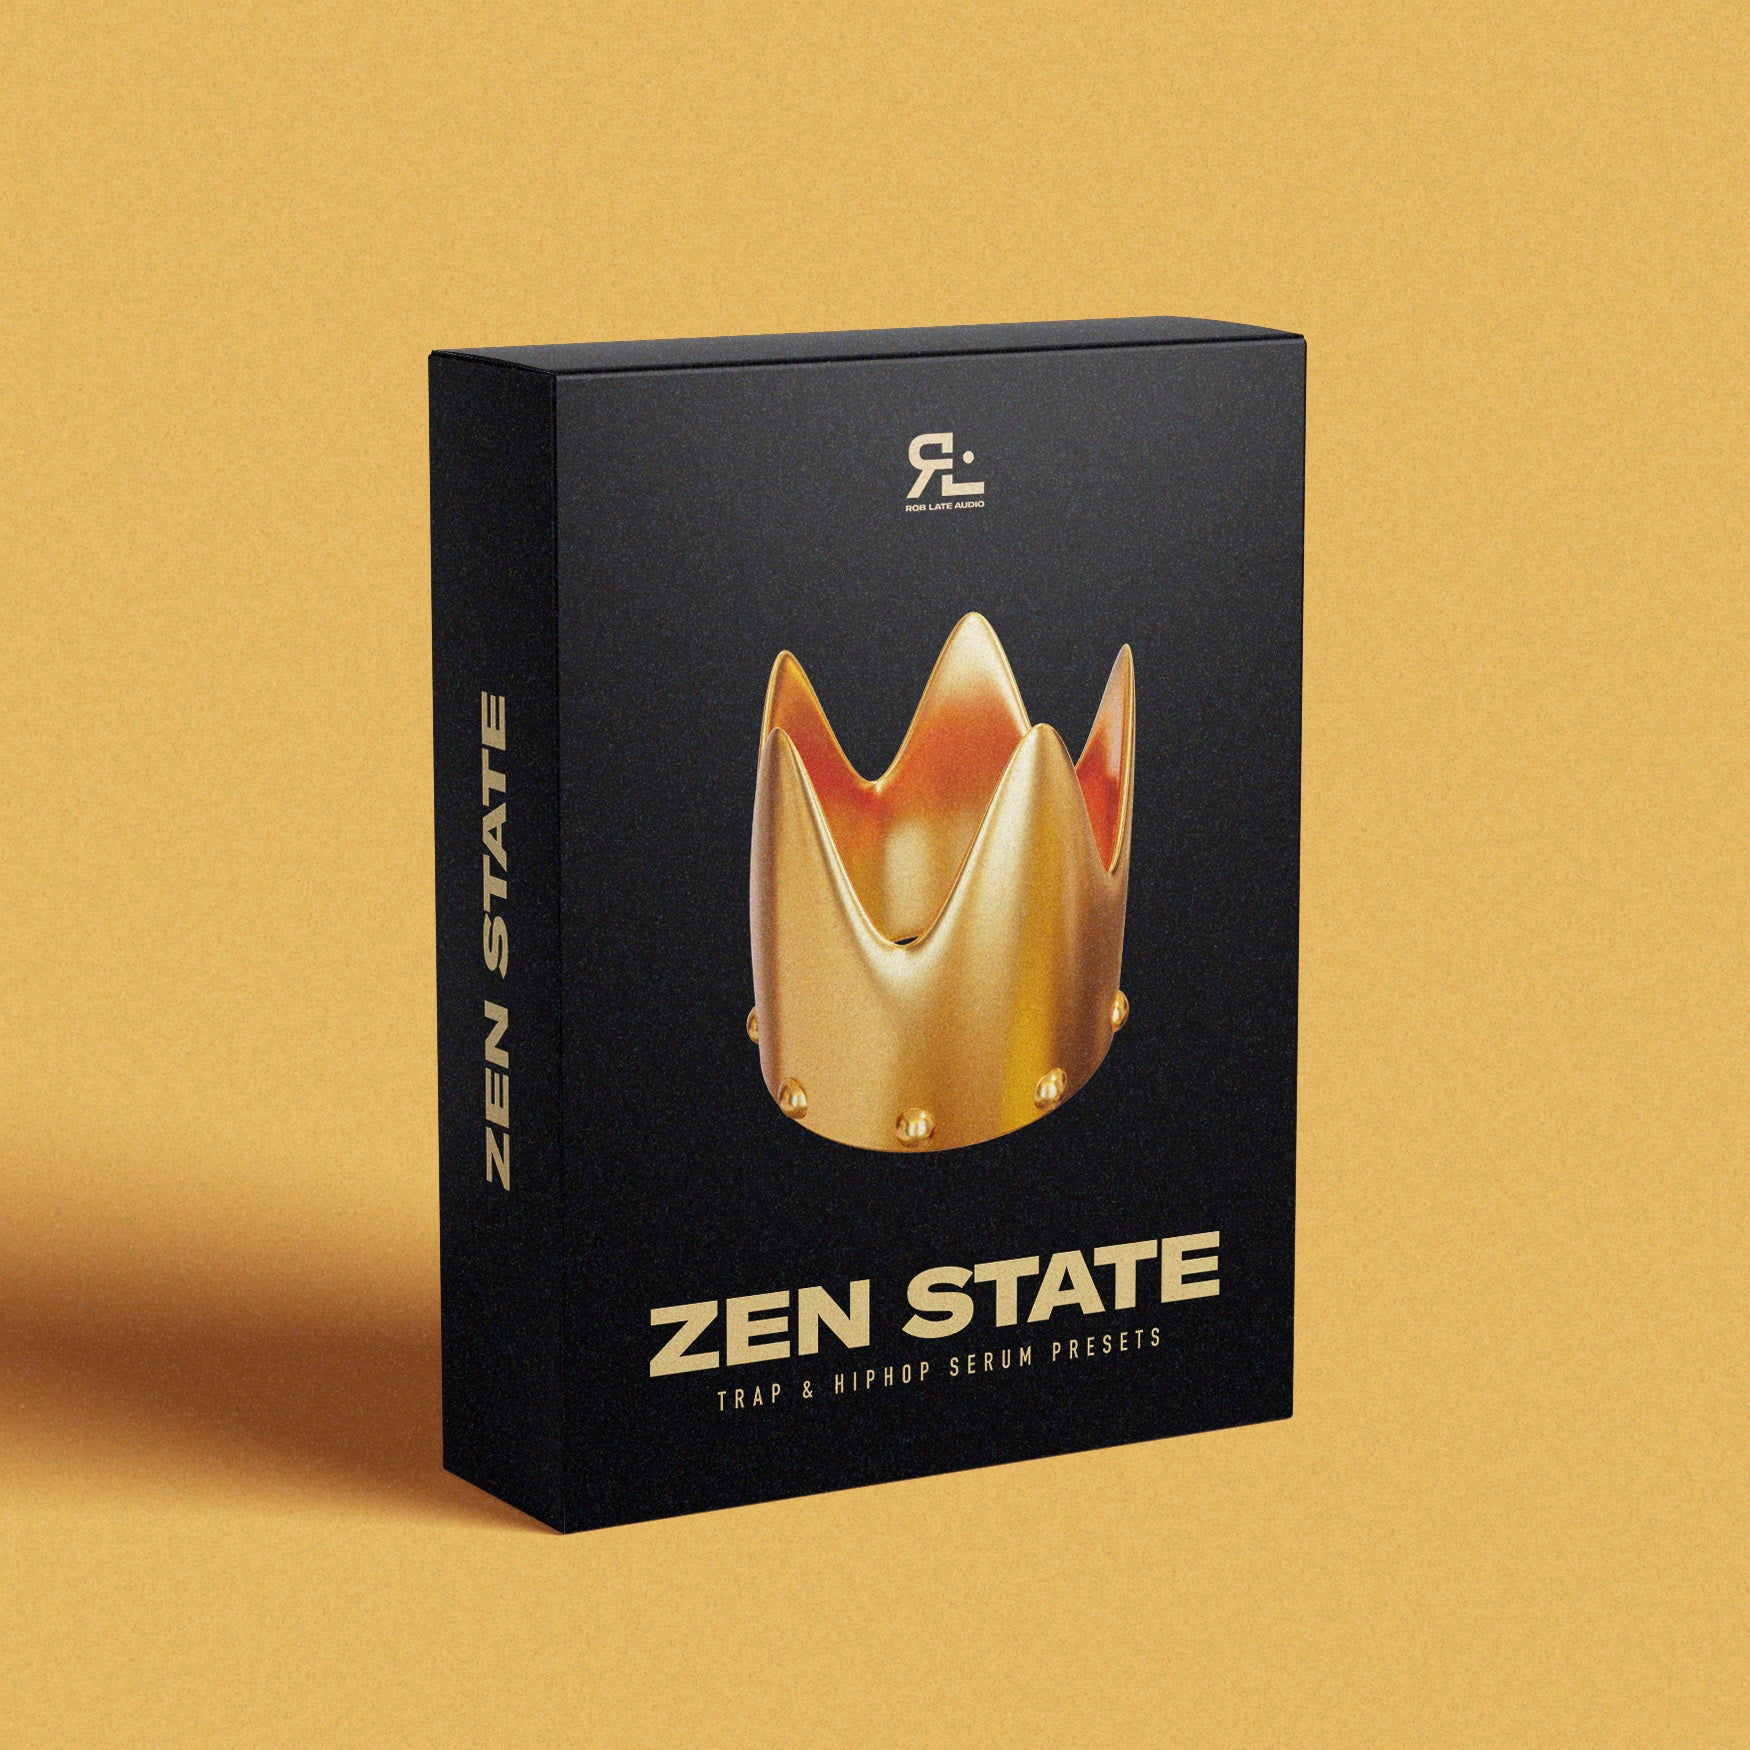 Zen State - Trap & Hip Hop Serum Presets